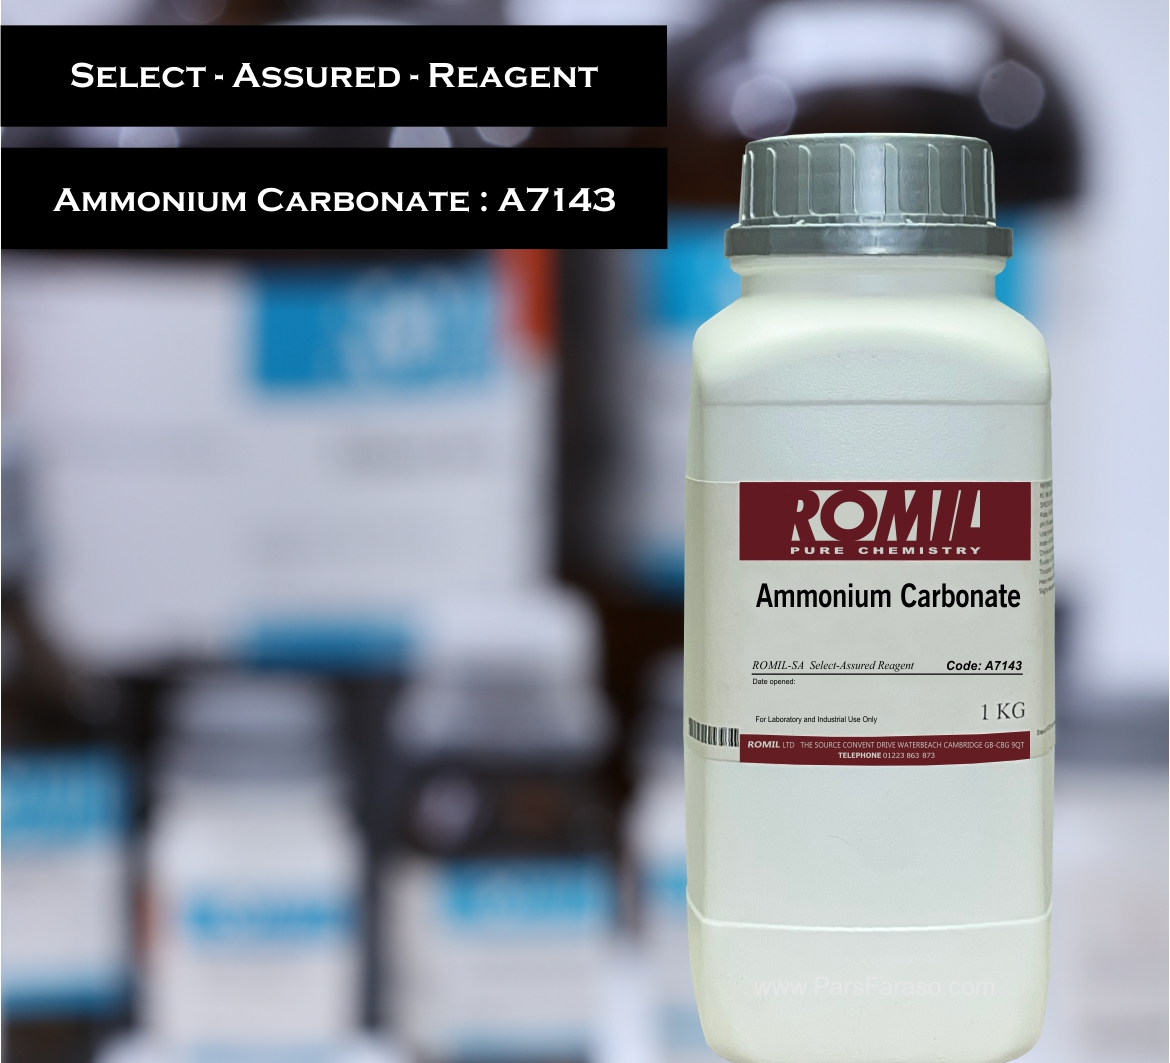 آمونیوم کربنات  کد کاتالوگ روميل A7143 - خرید و فروش مواد شیمیایی